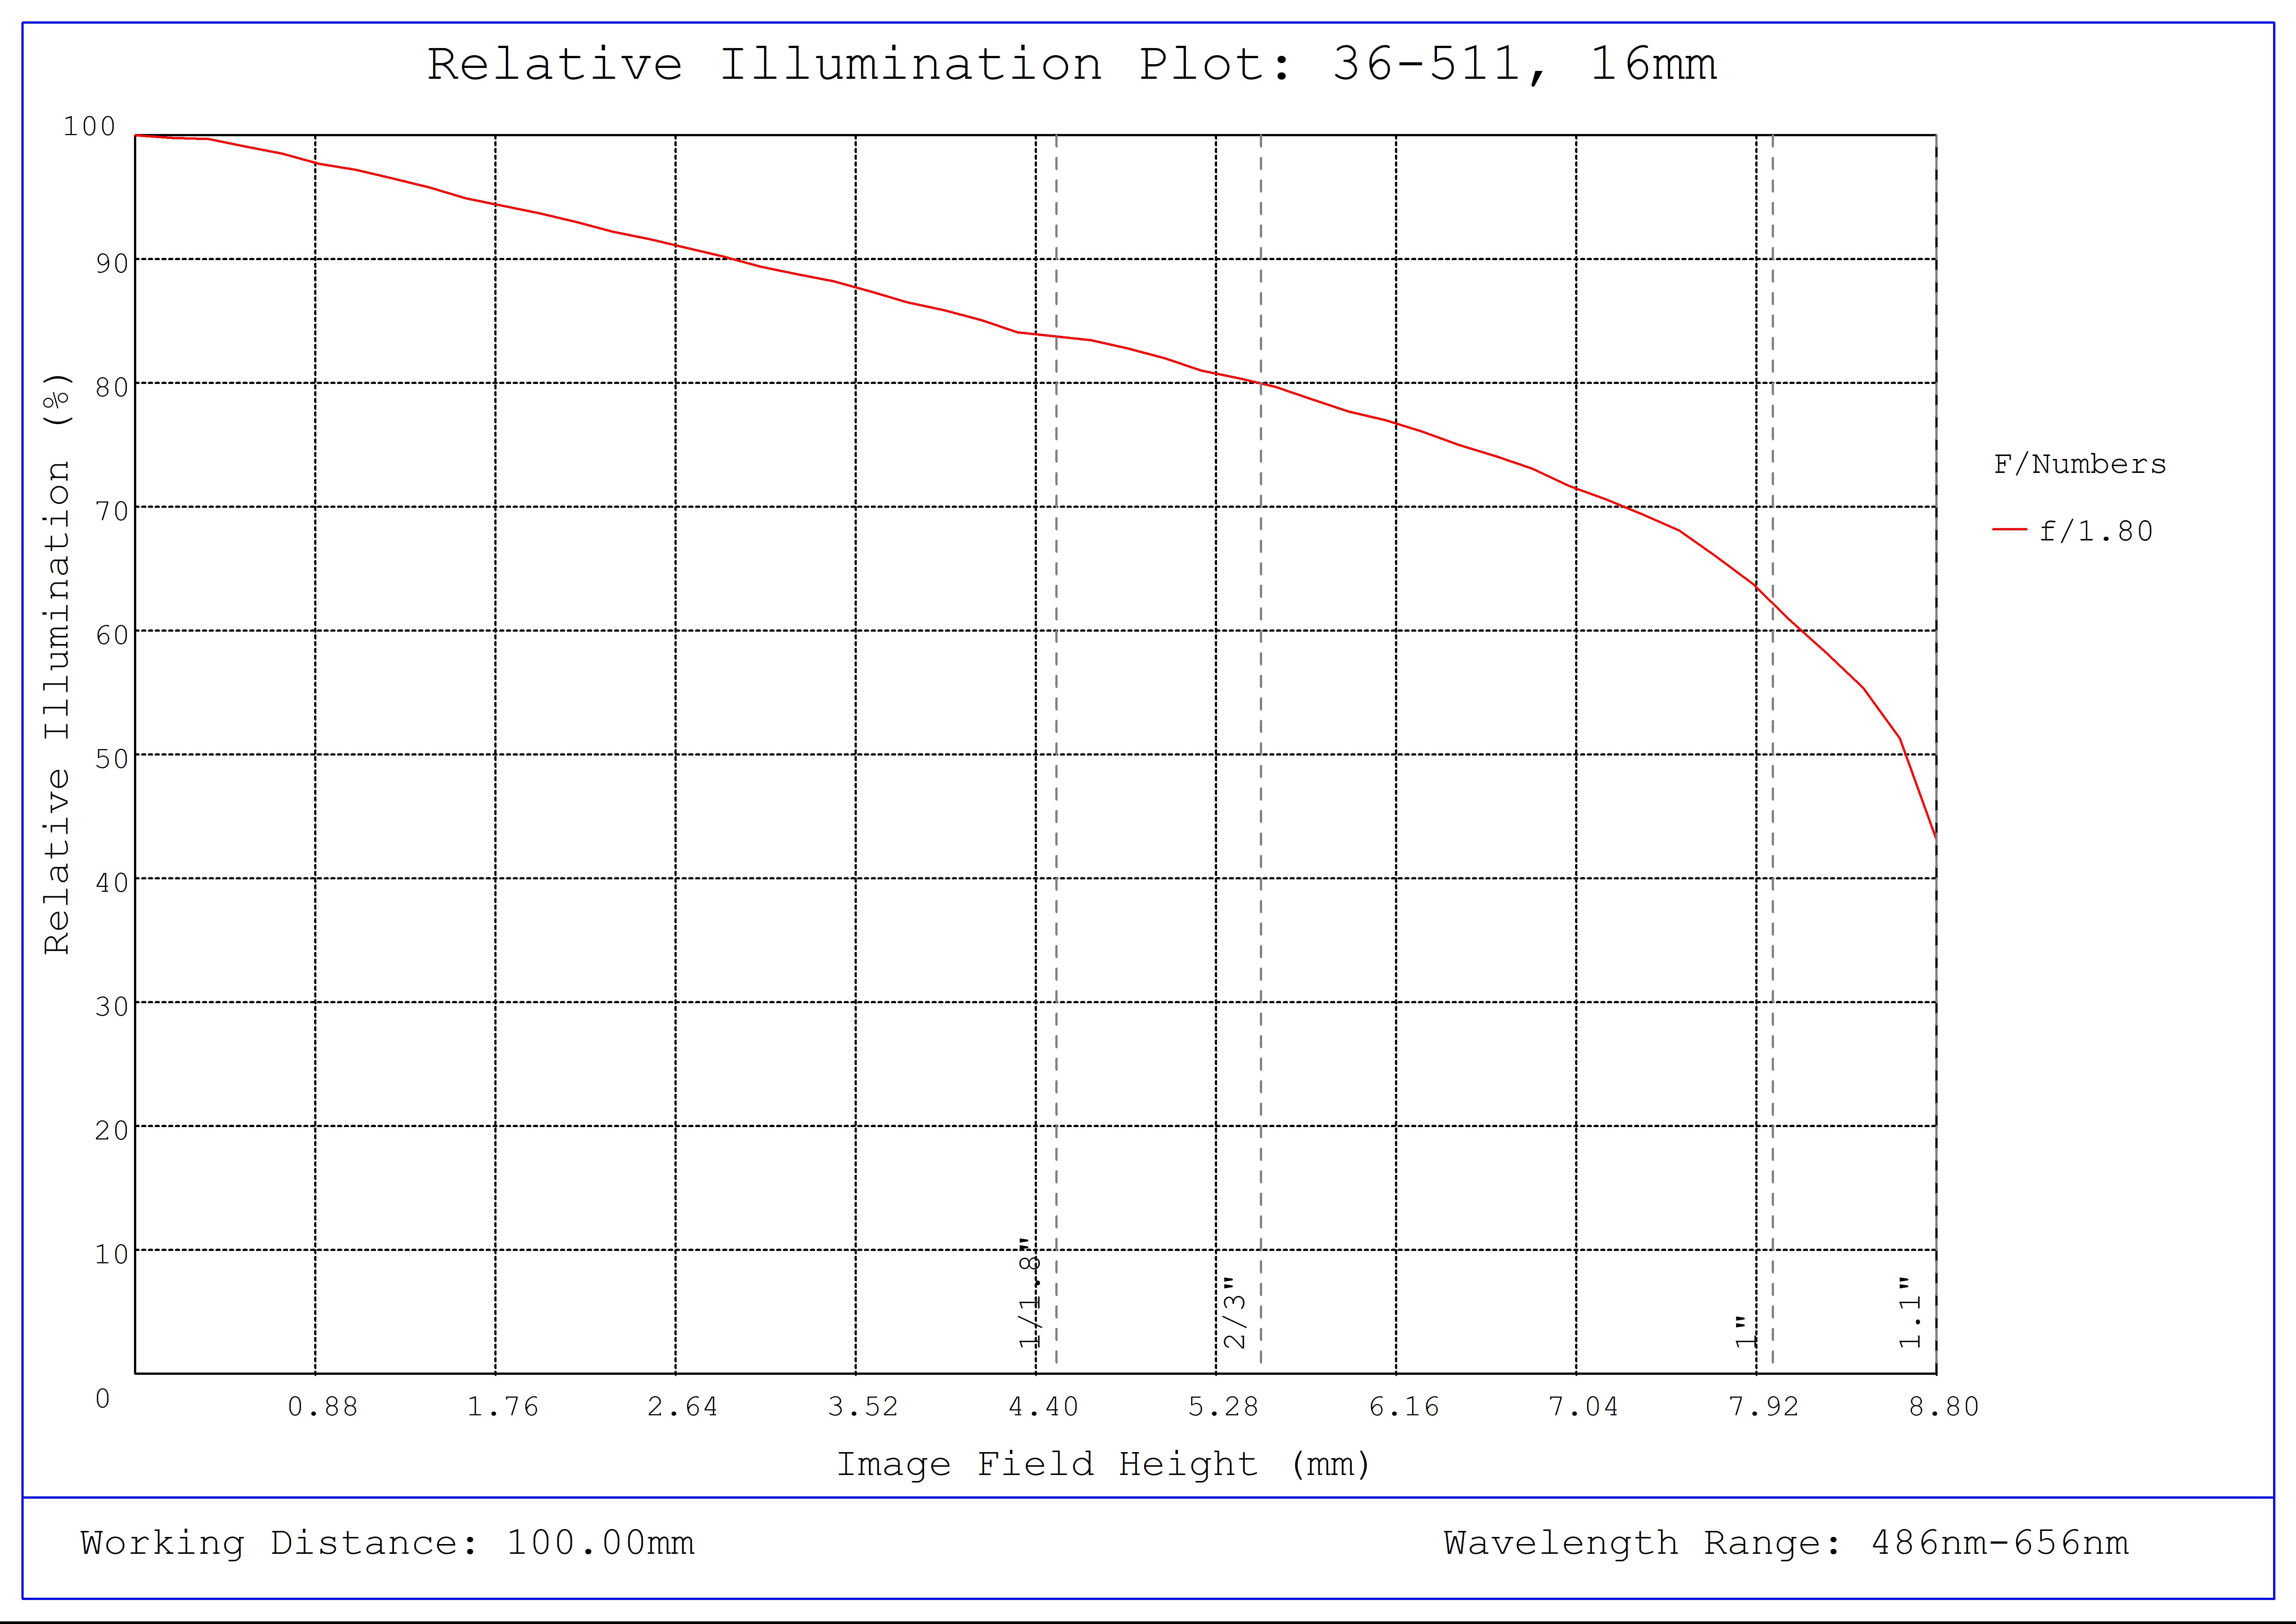 #36-511, 16mm f/1.8, HPr Series Fixed Focal Length Lens, Relative Illumination Plot